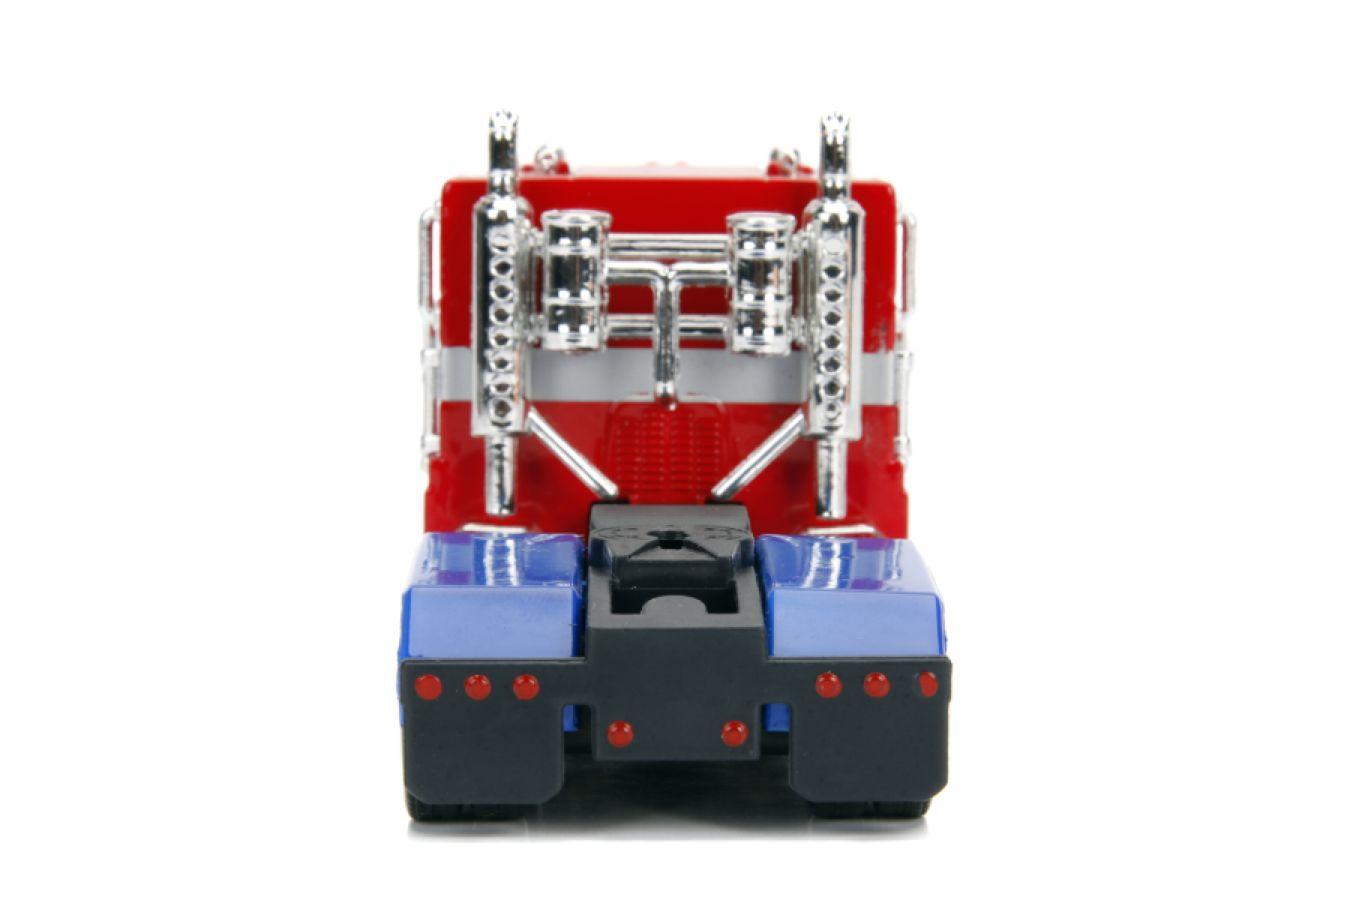 JAD99477 Transformers (TV) - Optimus Prime 1:32 Scale Hollywood Ride Diecast Vehicle - Jada Toys - Titan Pop Culture